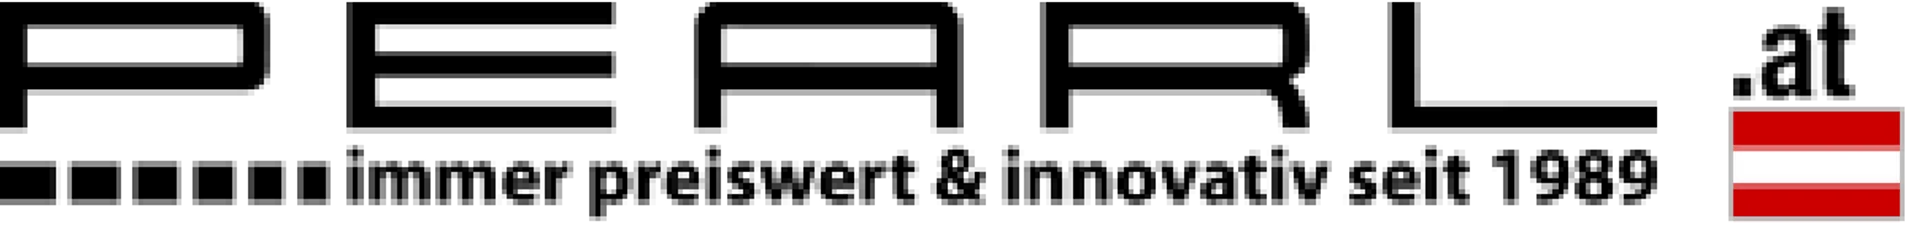 PEARL logo die aktuell Flugblatt